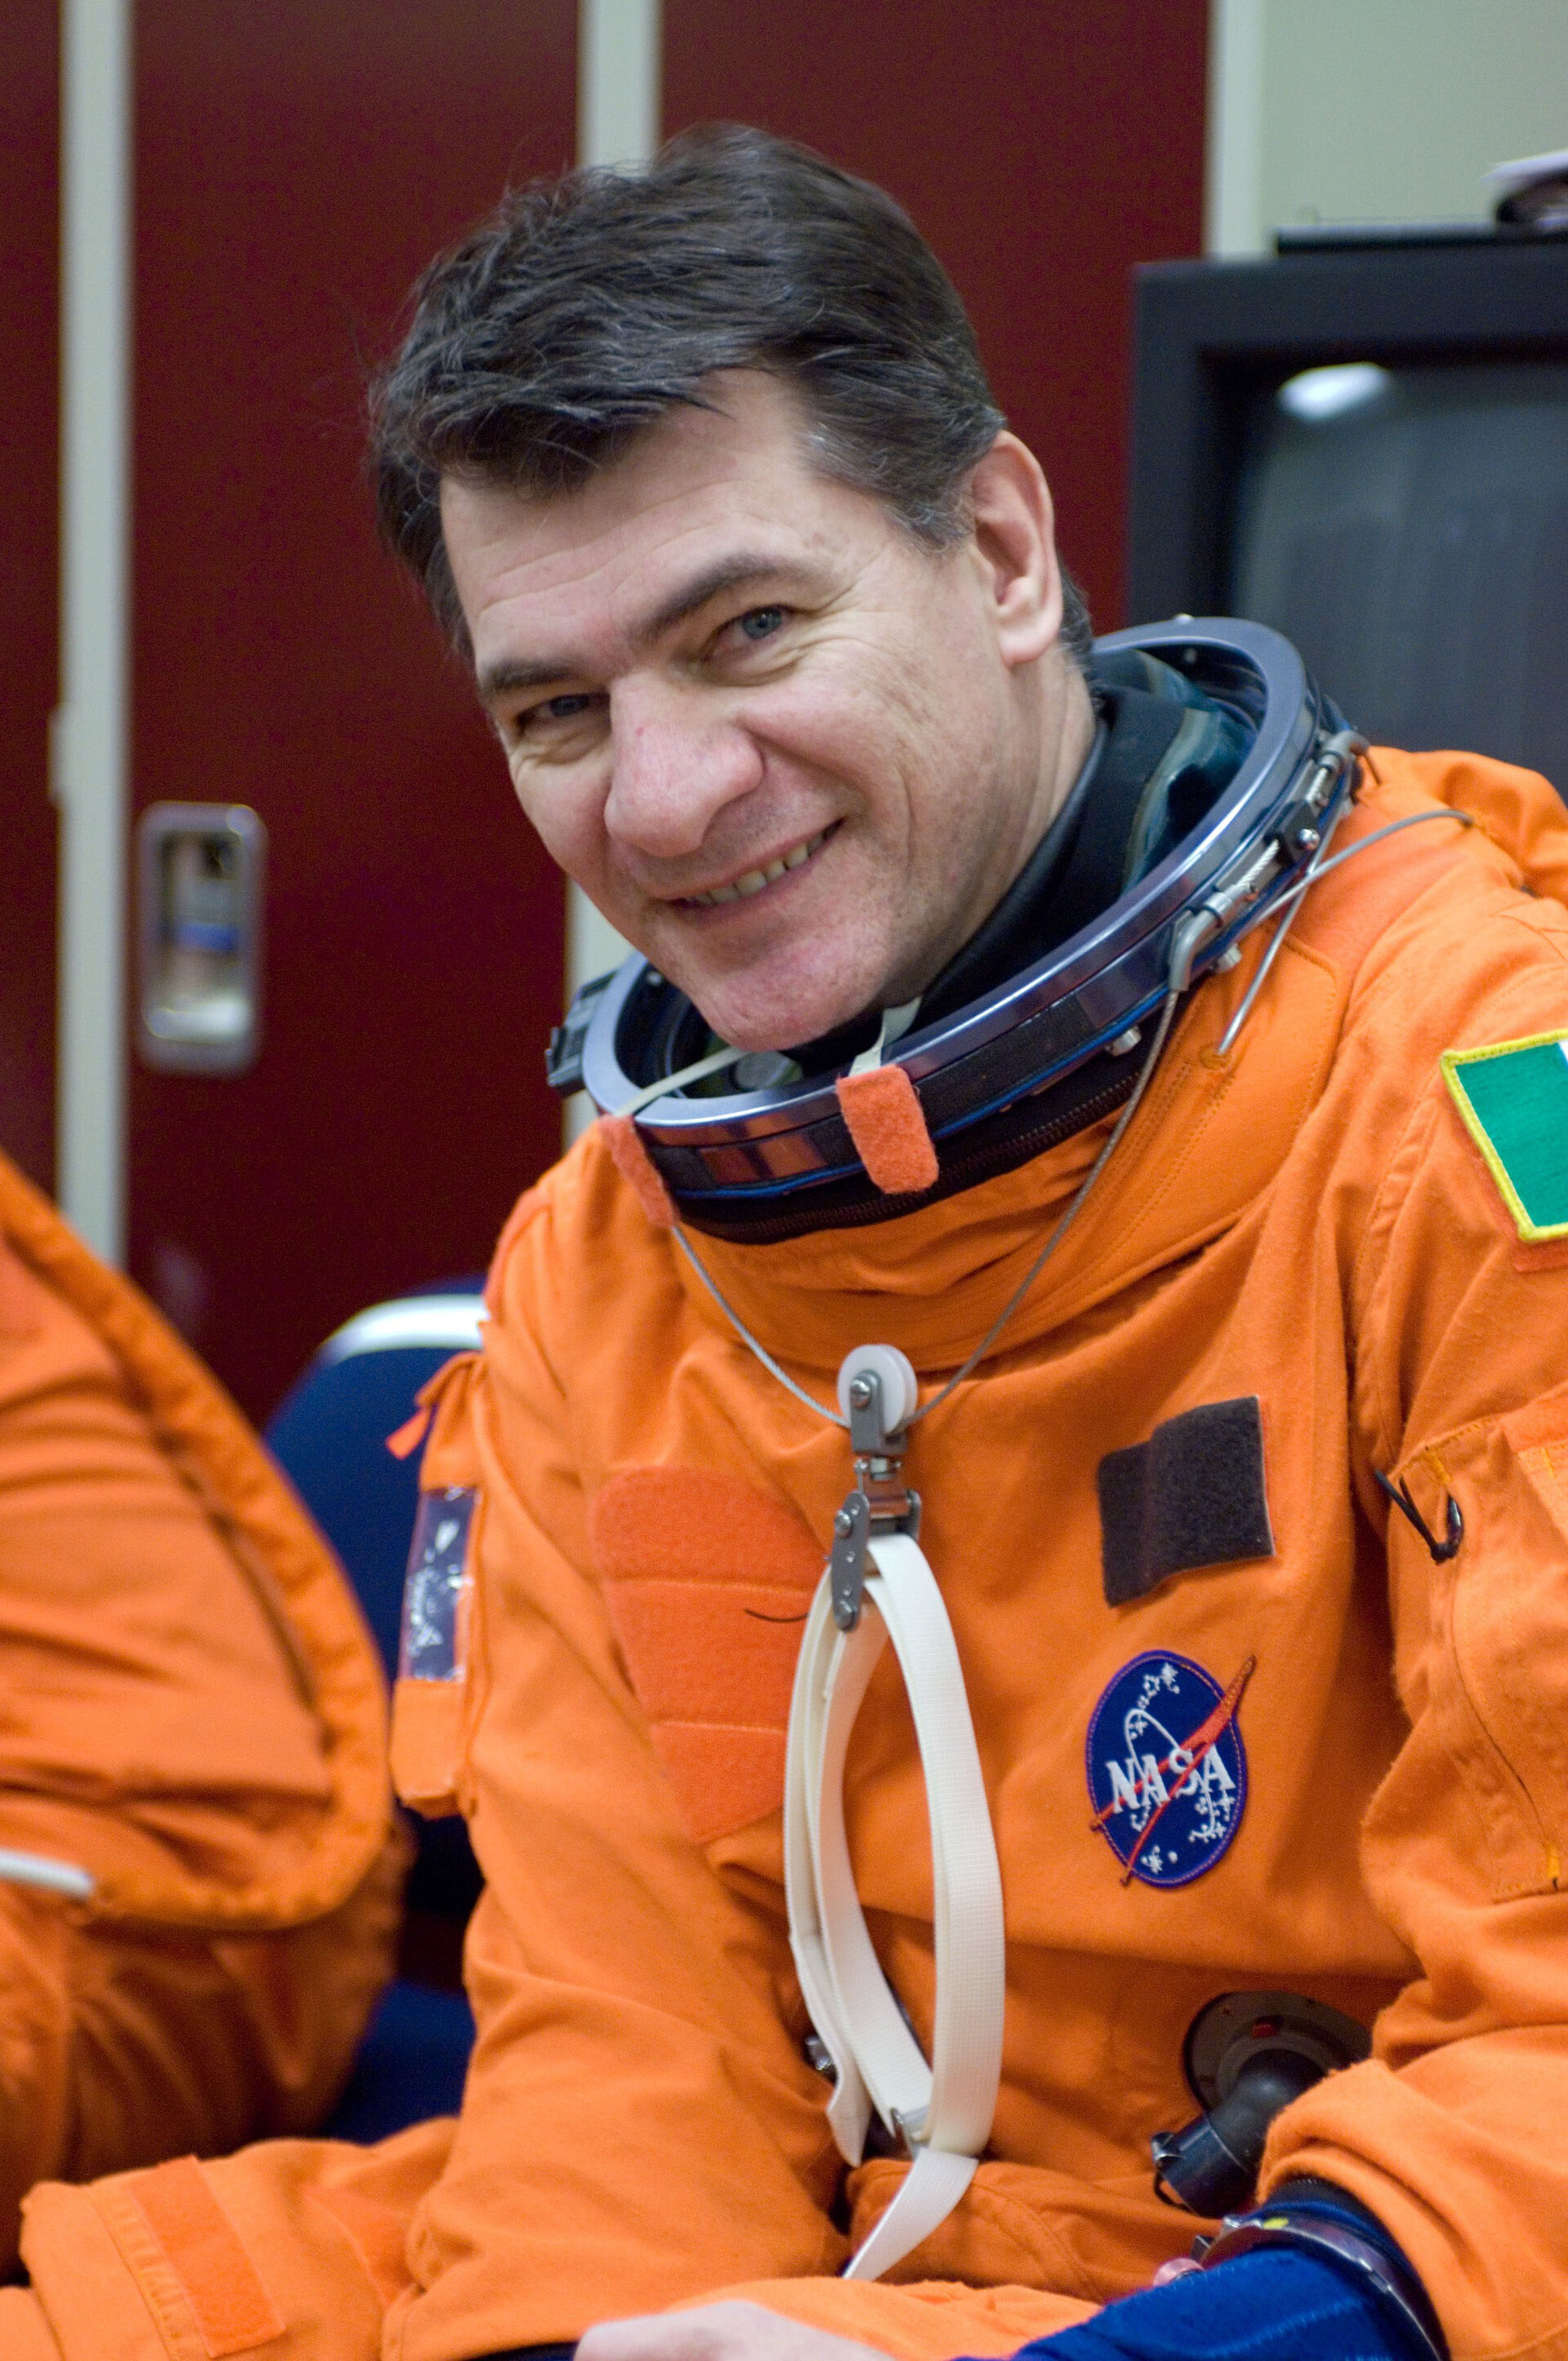 ESA astronaut Paolo Nespoli training at NASA's Johnson Space Center on 7 February 2007